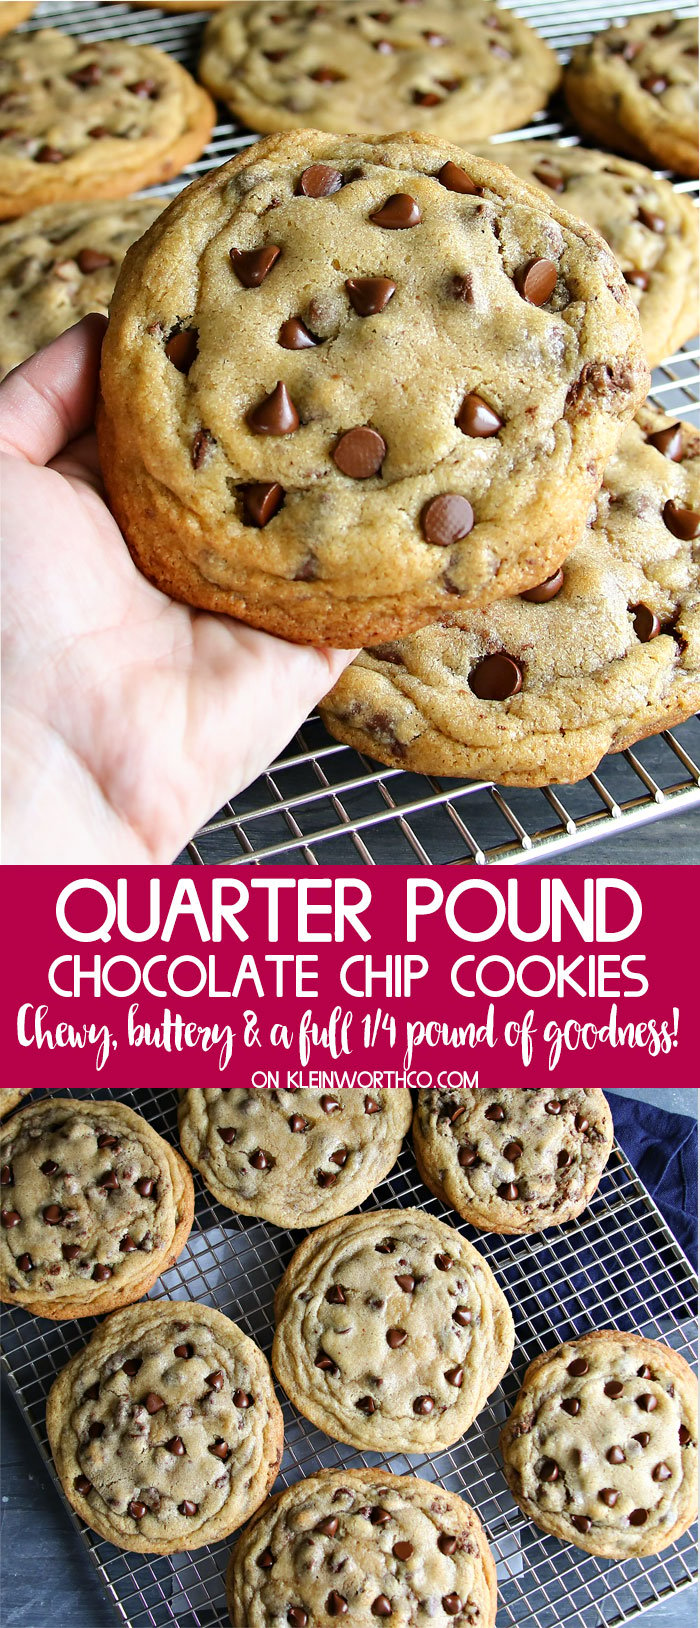 Quarter Pound Chocolate Chip Cookies